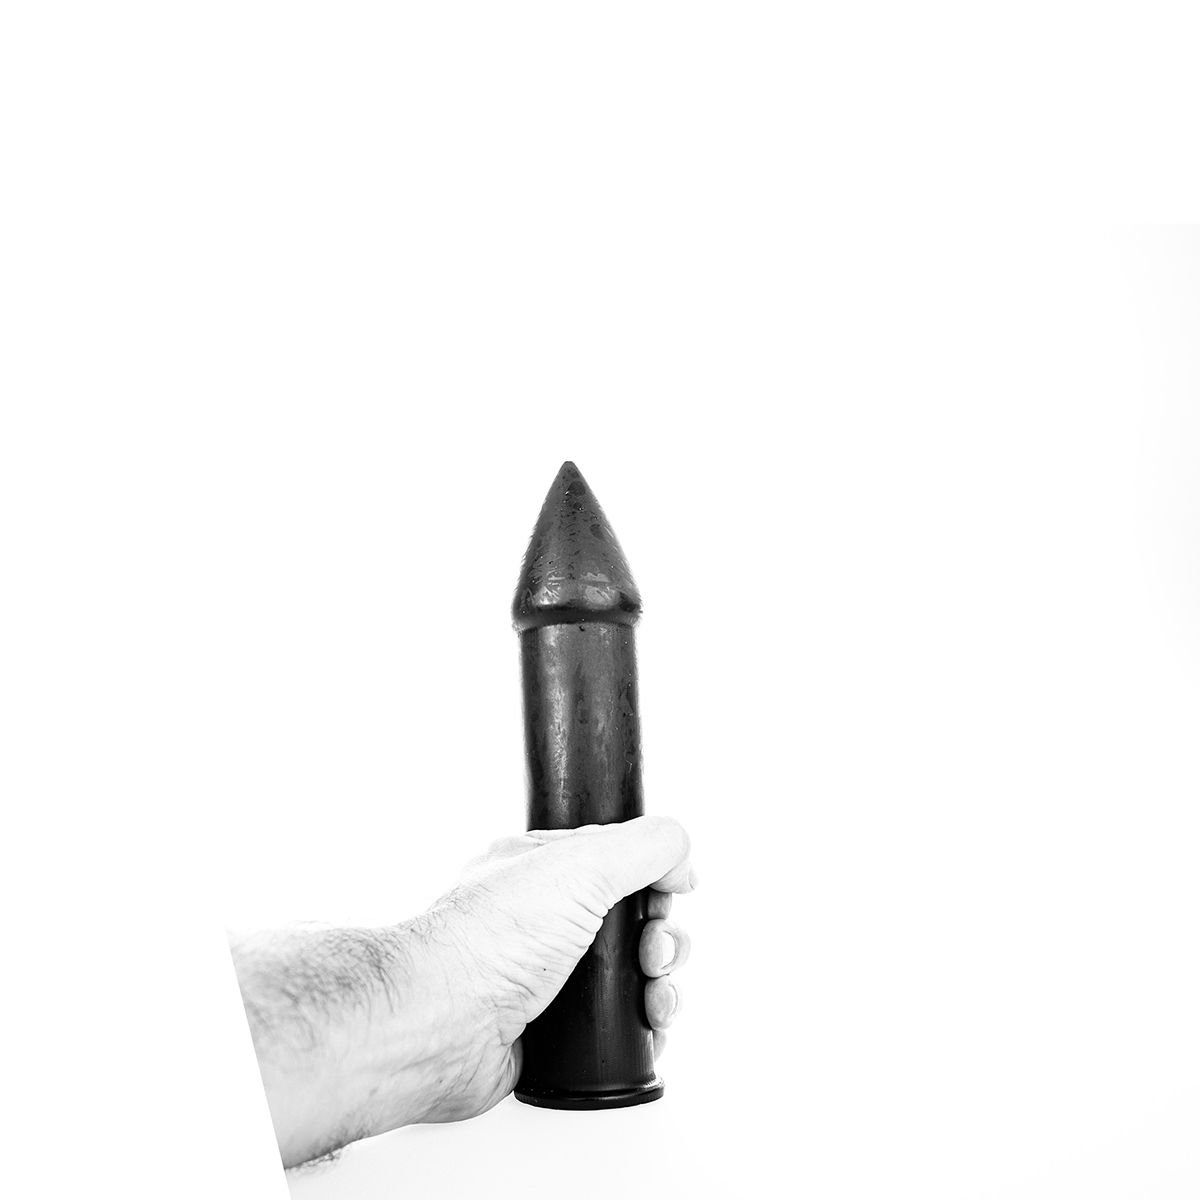 Dildo Pointed Tip All Black 24 cm in SexShop KUR Romania